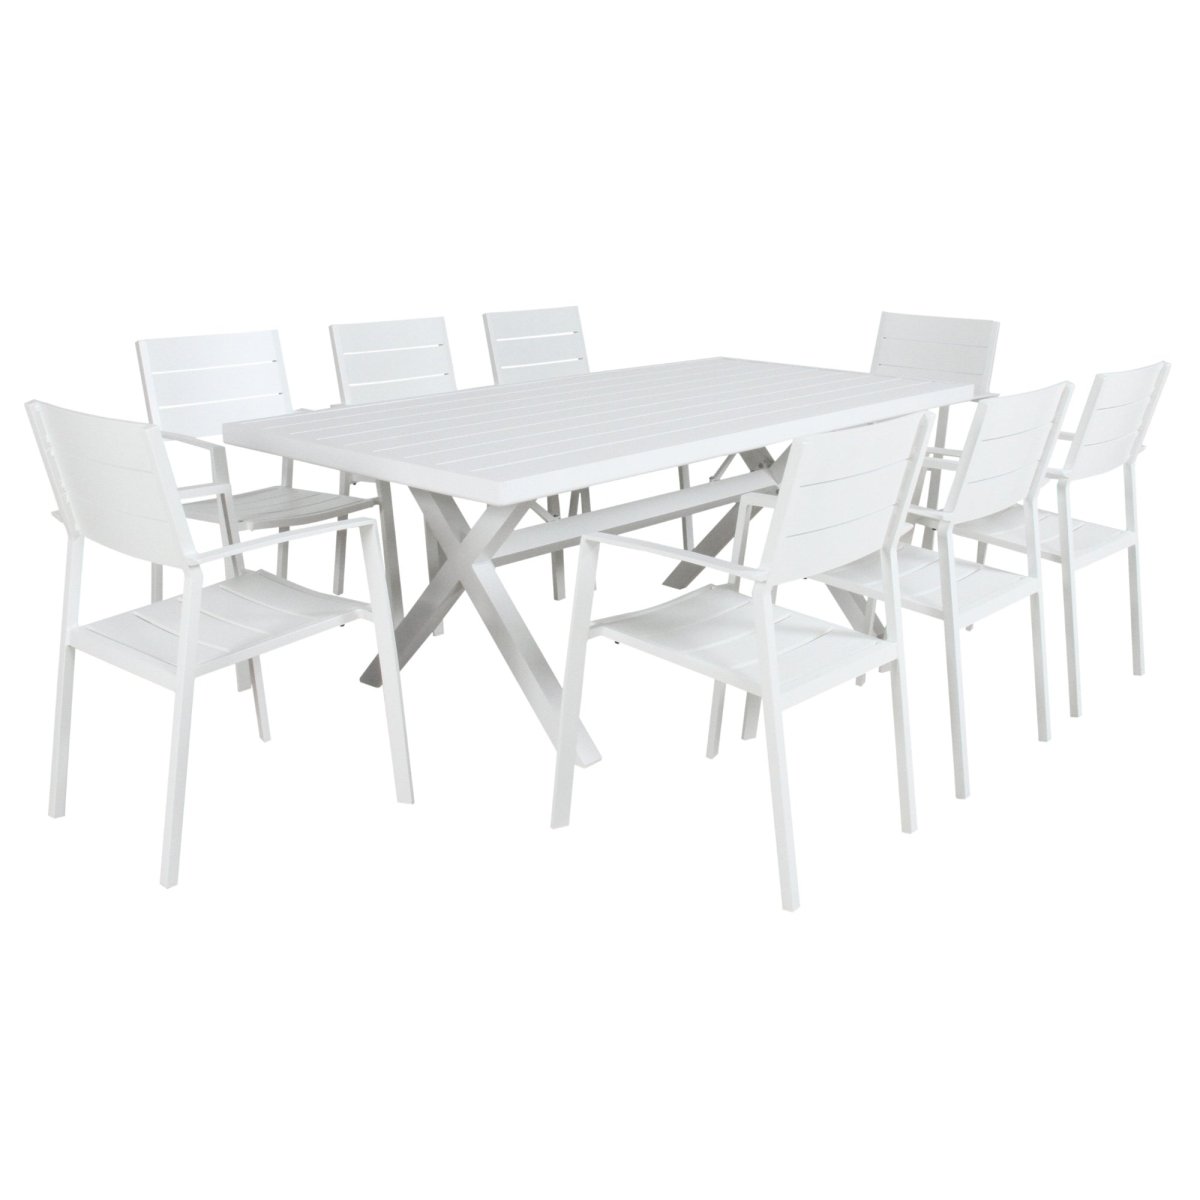 Percy 9pc 200cm Outdoor Trestle Dining Table Chair Set Aluminium Frame White - Outdoorium